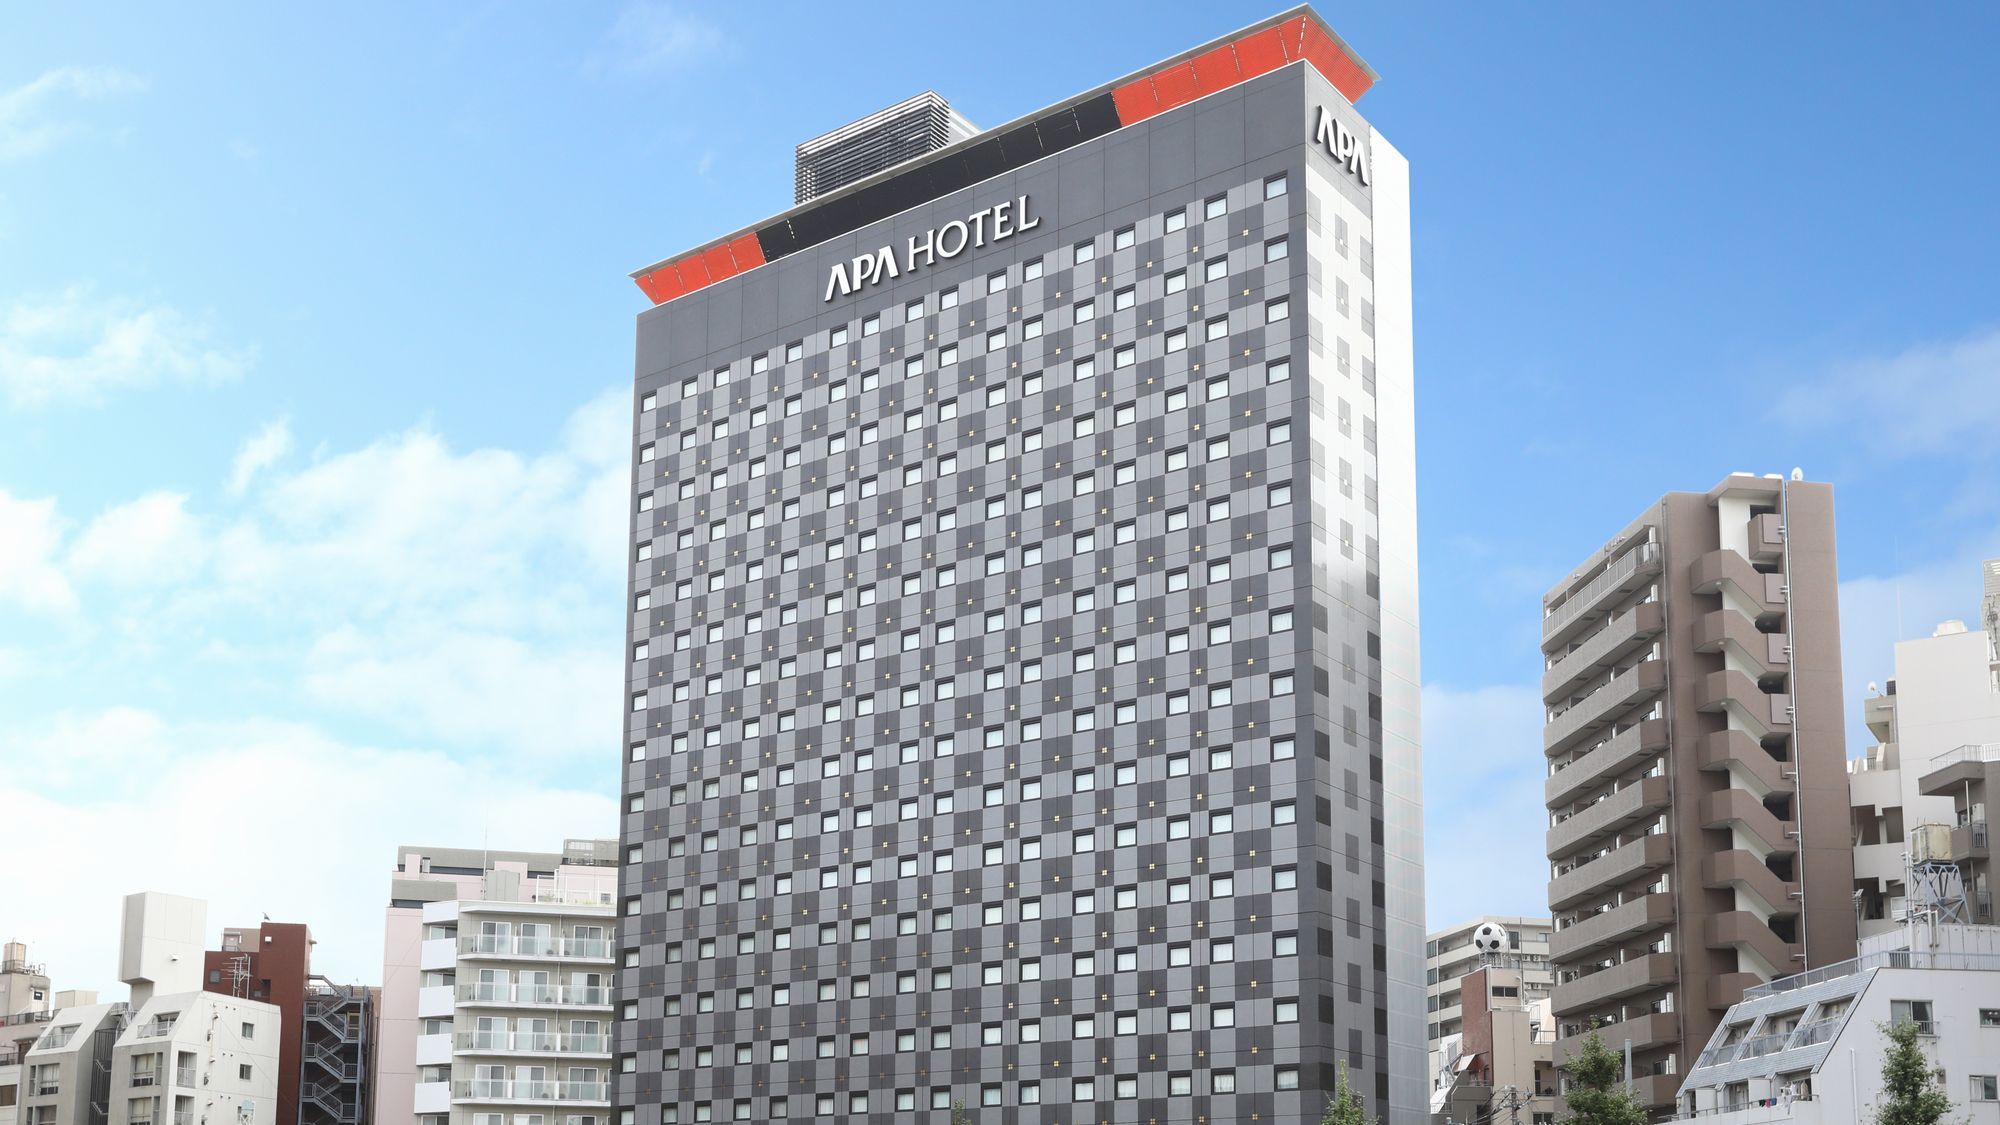 APA Hotel Yamanote Otsuka Eki Tower